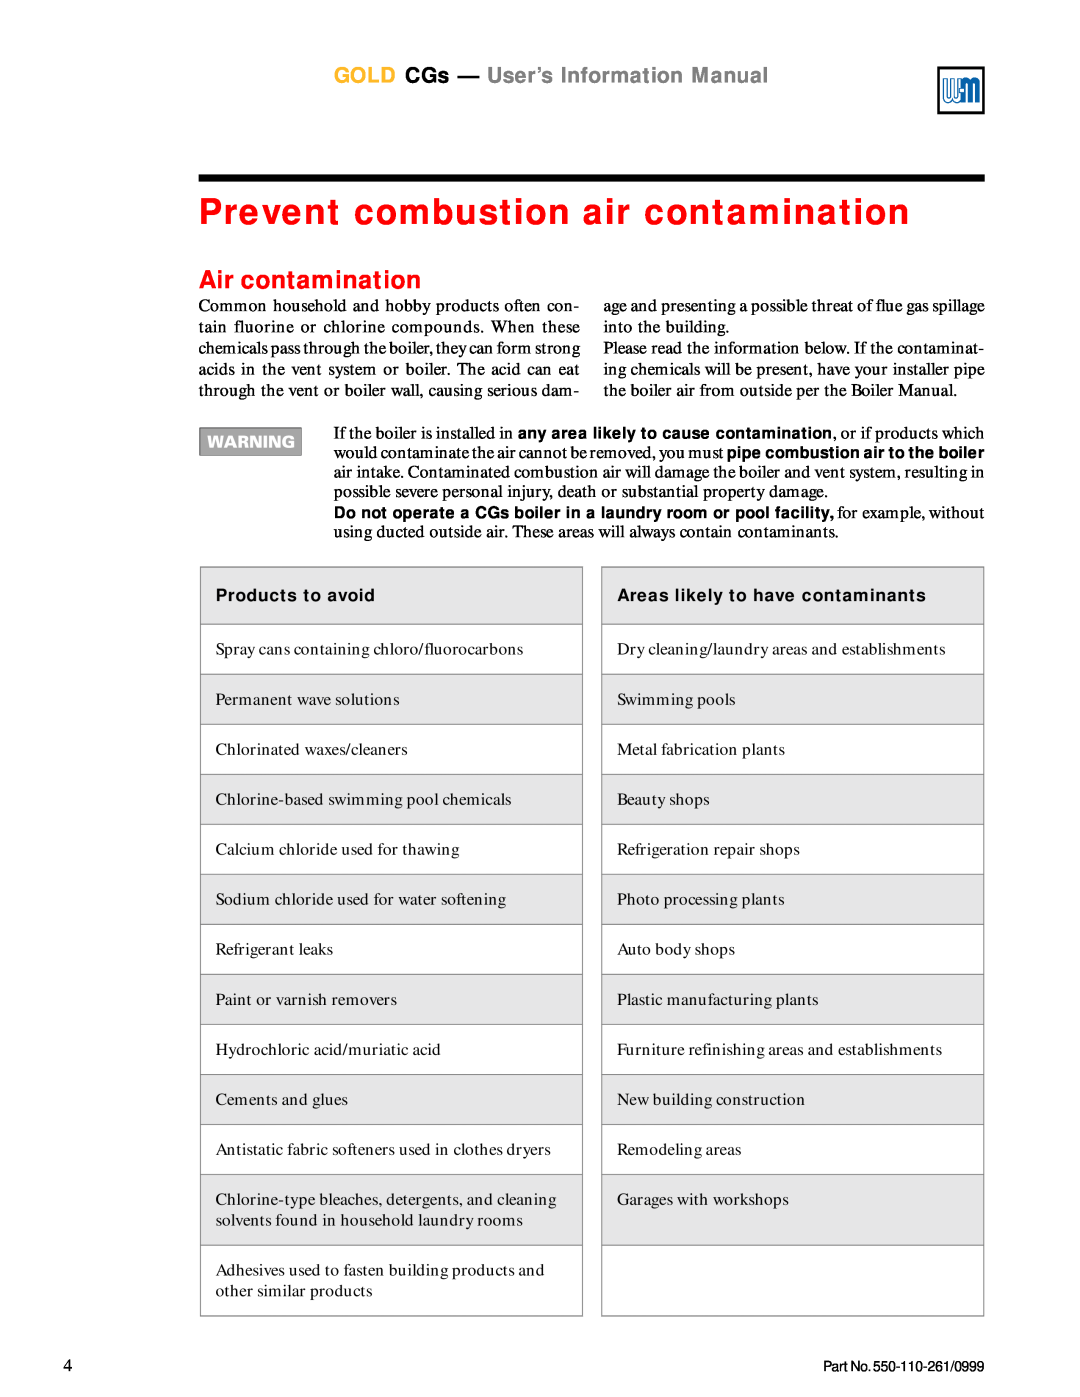 Weil-McLain manual Prevent combustion air contamination, Air contamination, GOLD CGs - User’s Information Manual 